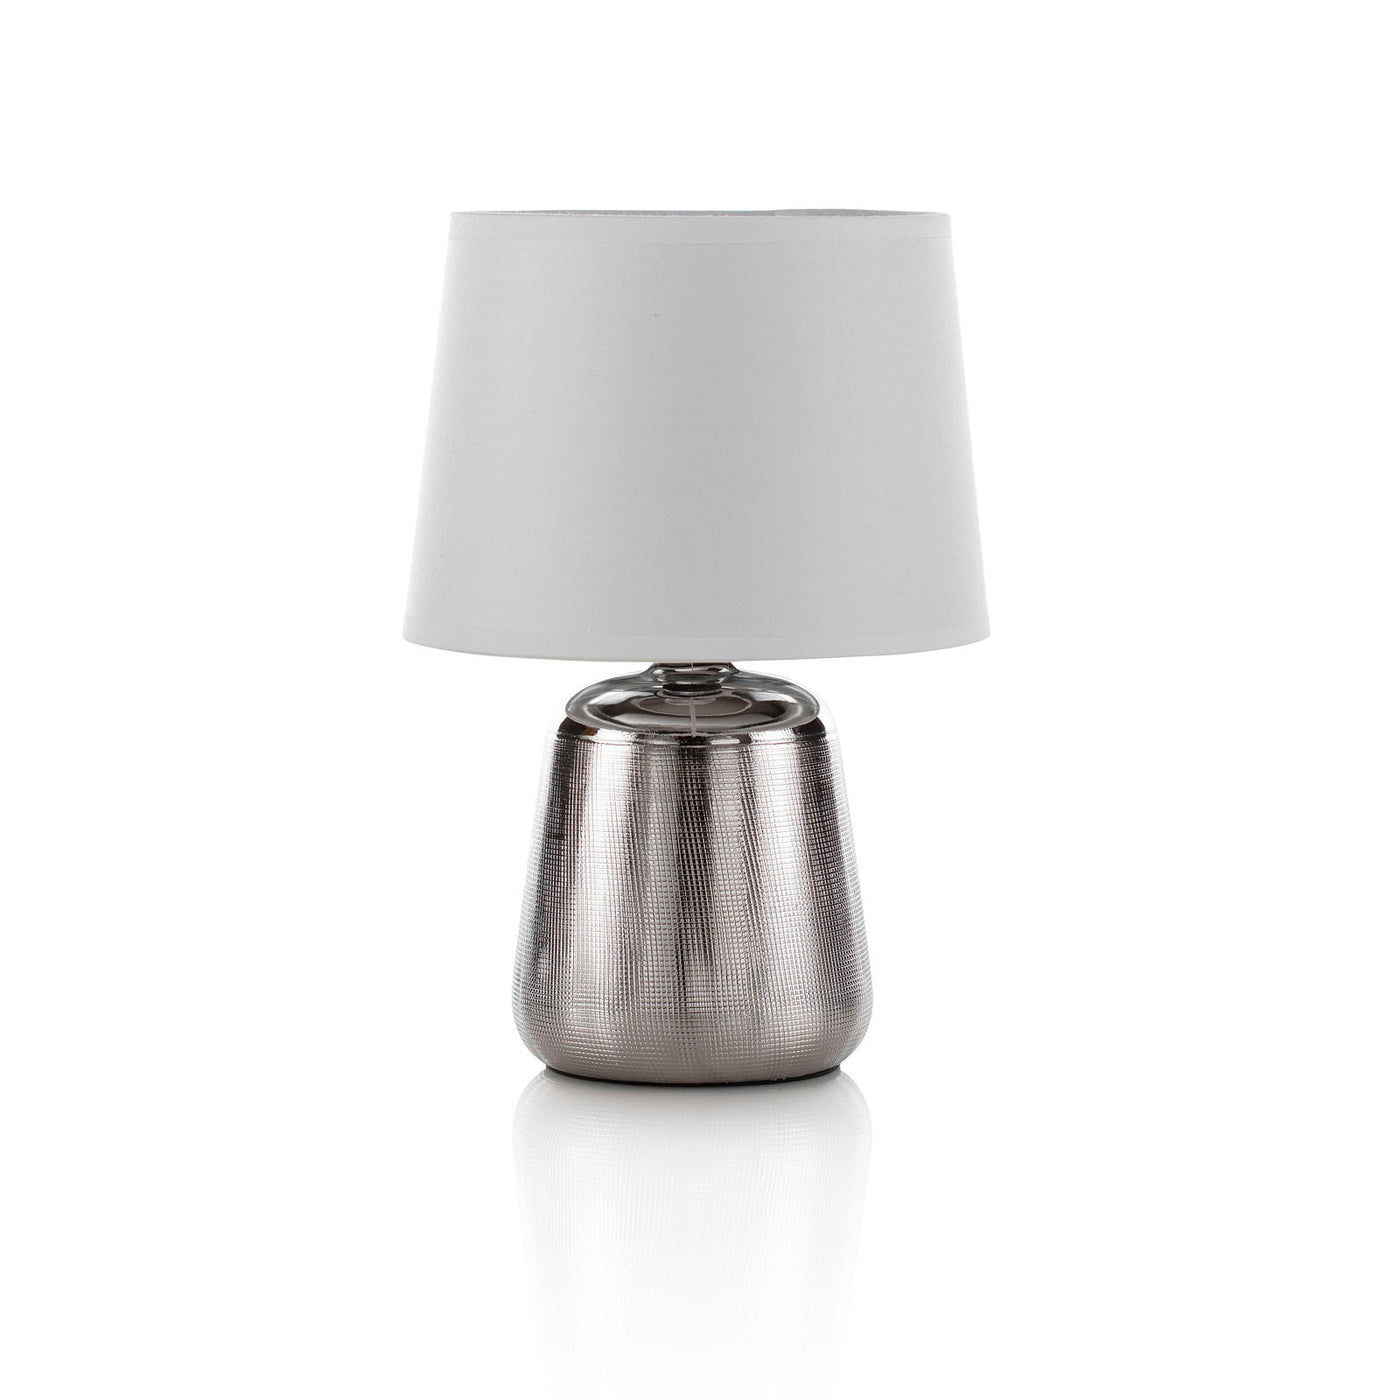 JAMBI table lamp white/silver